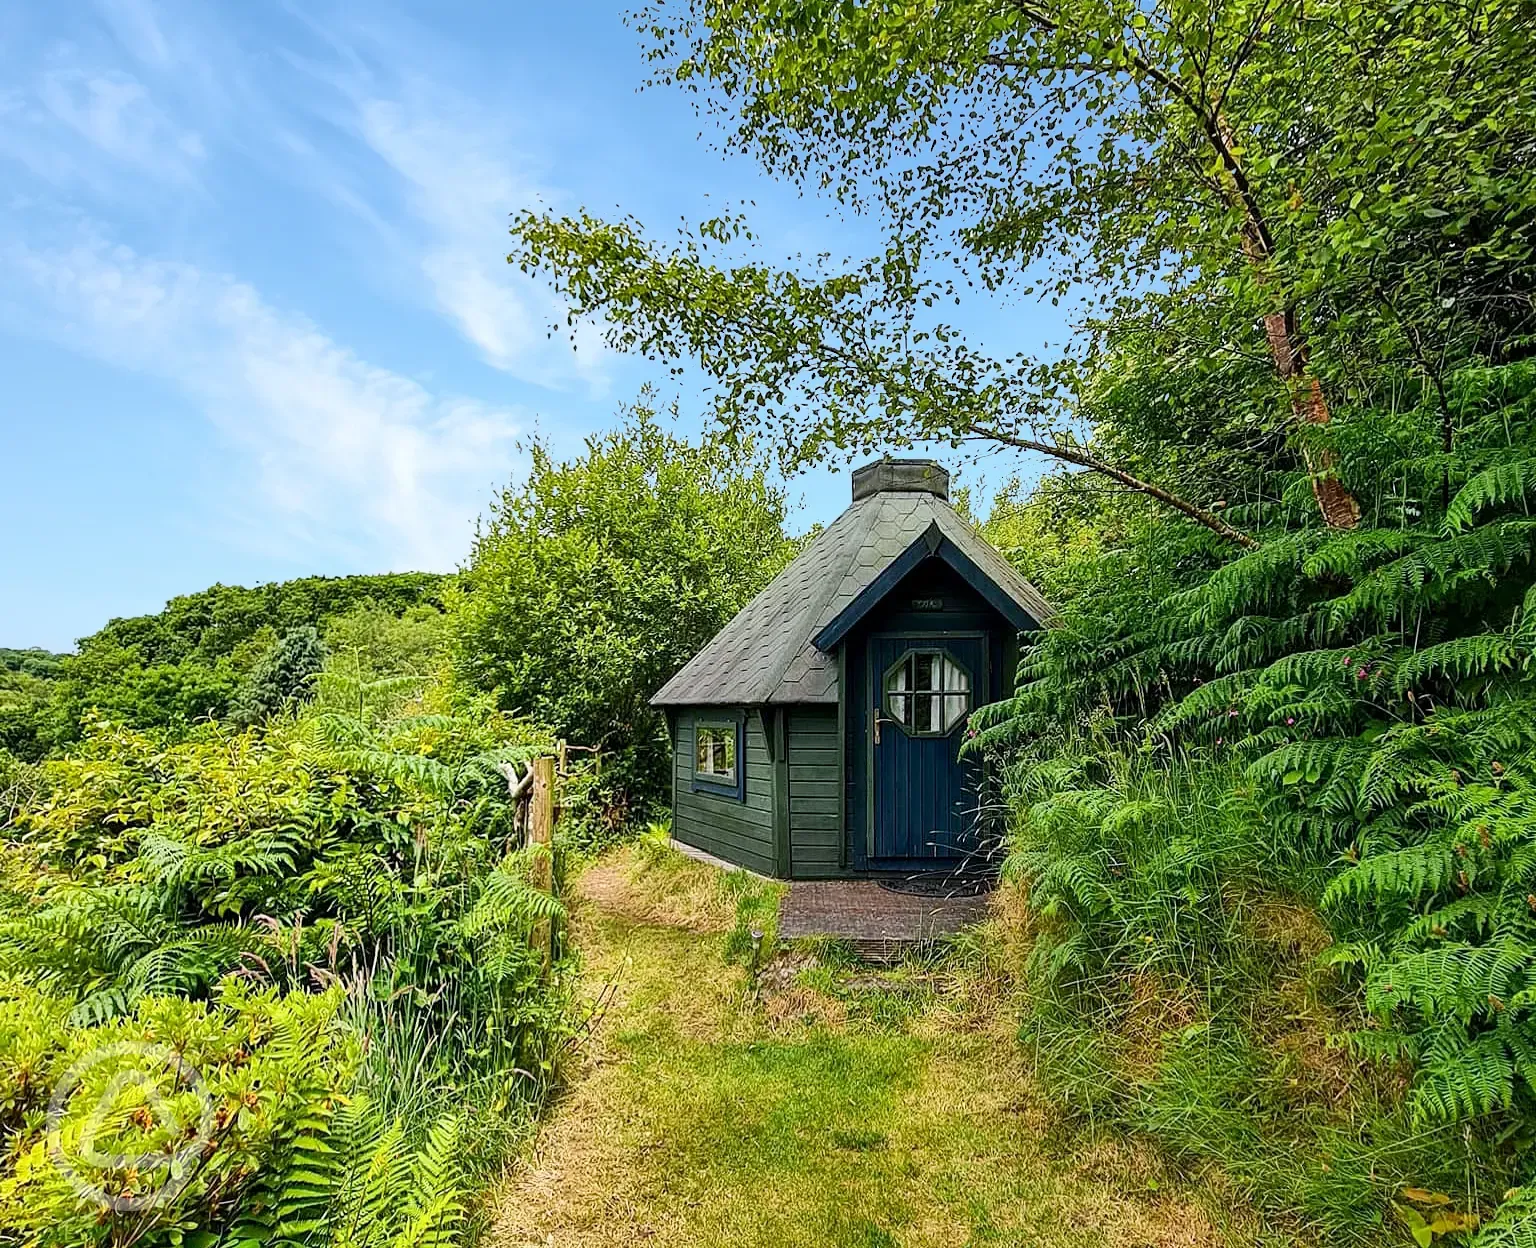 Hobbit hut exterior